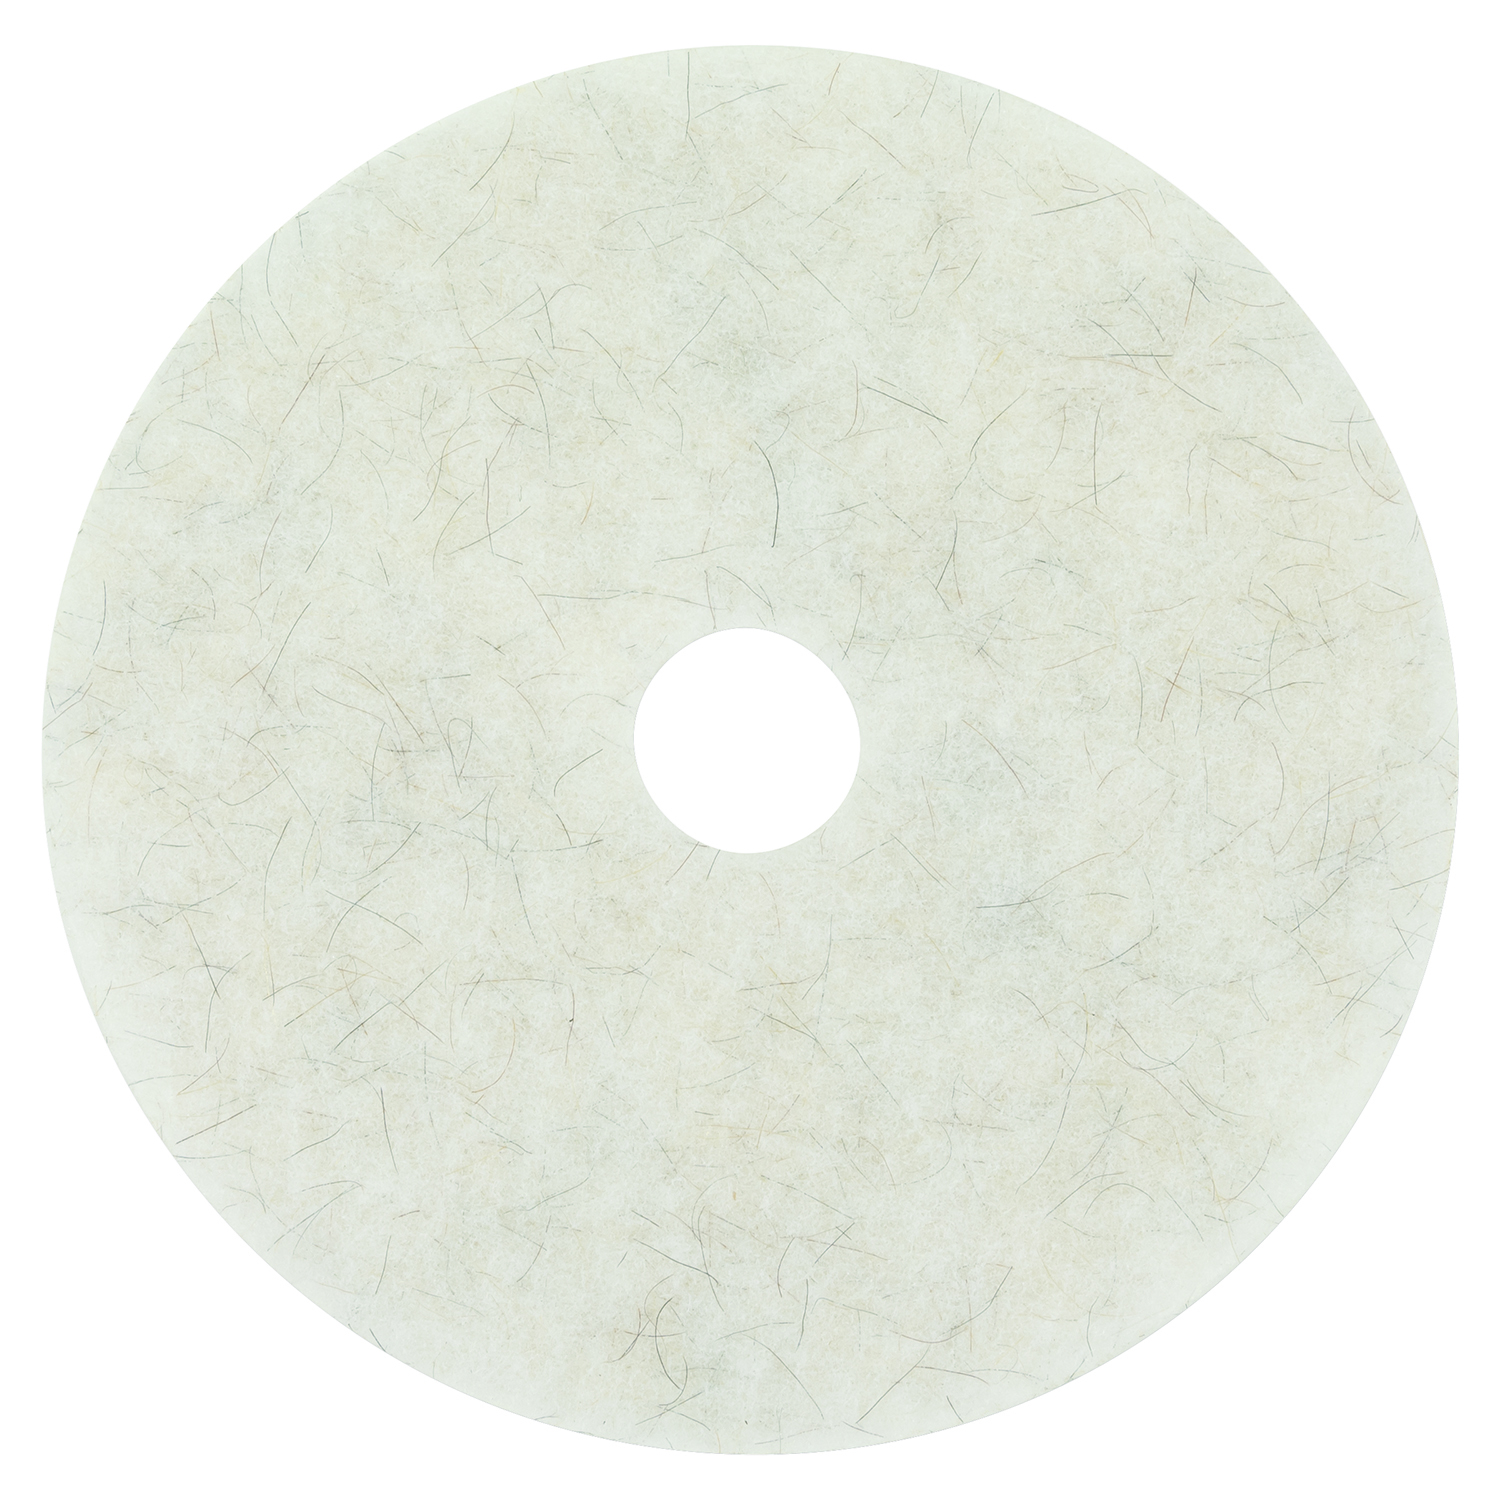  3M 3300 Ultra High-Speed Natural Blend Floor Burnishing Pads 3300, 20 Dia., White, 5/CT (MMM18210) 